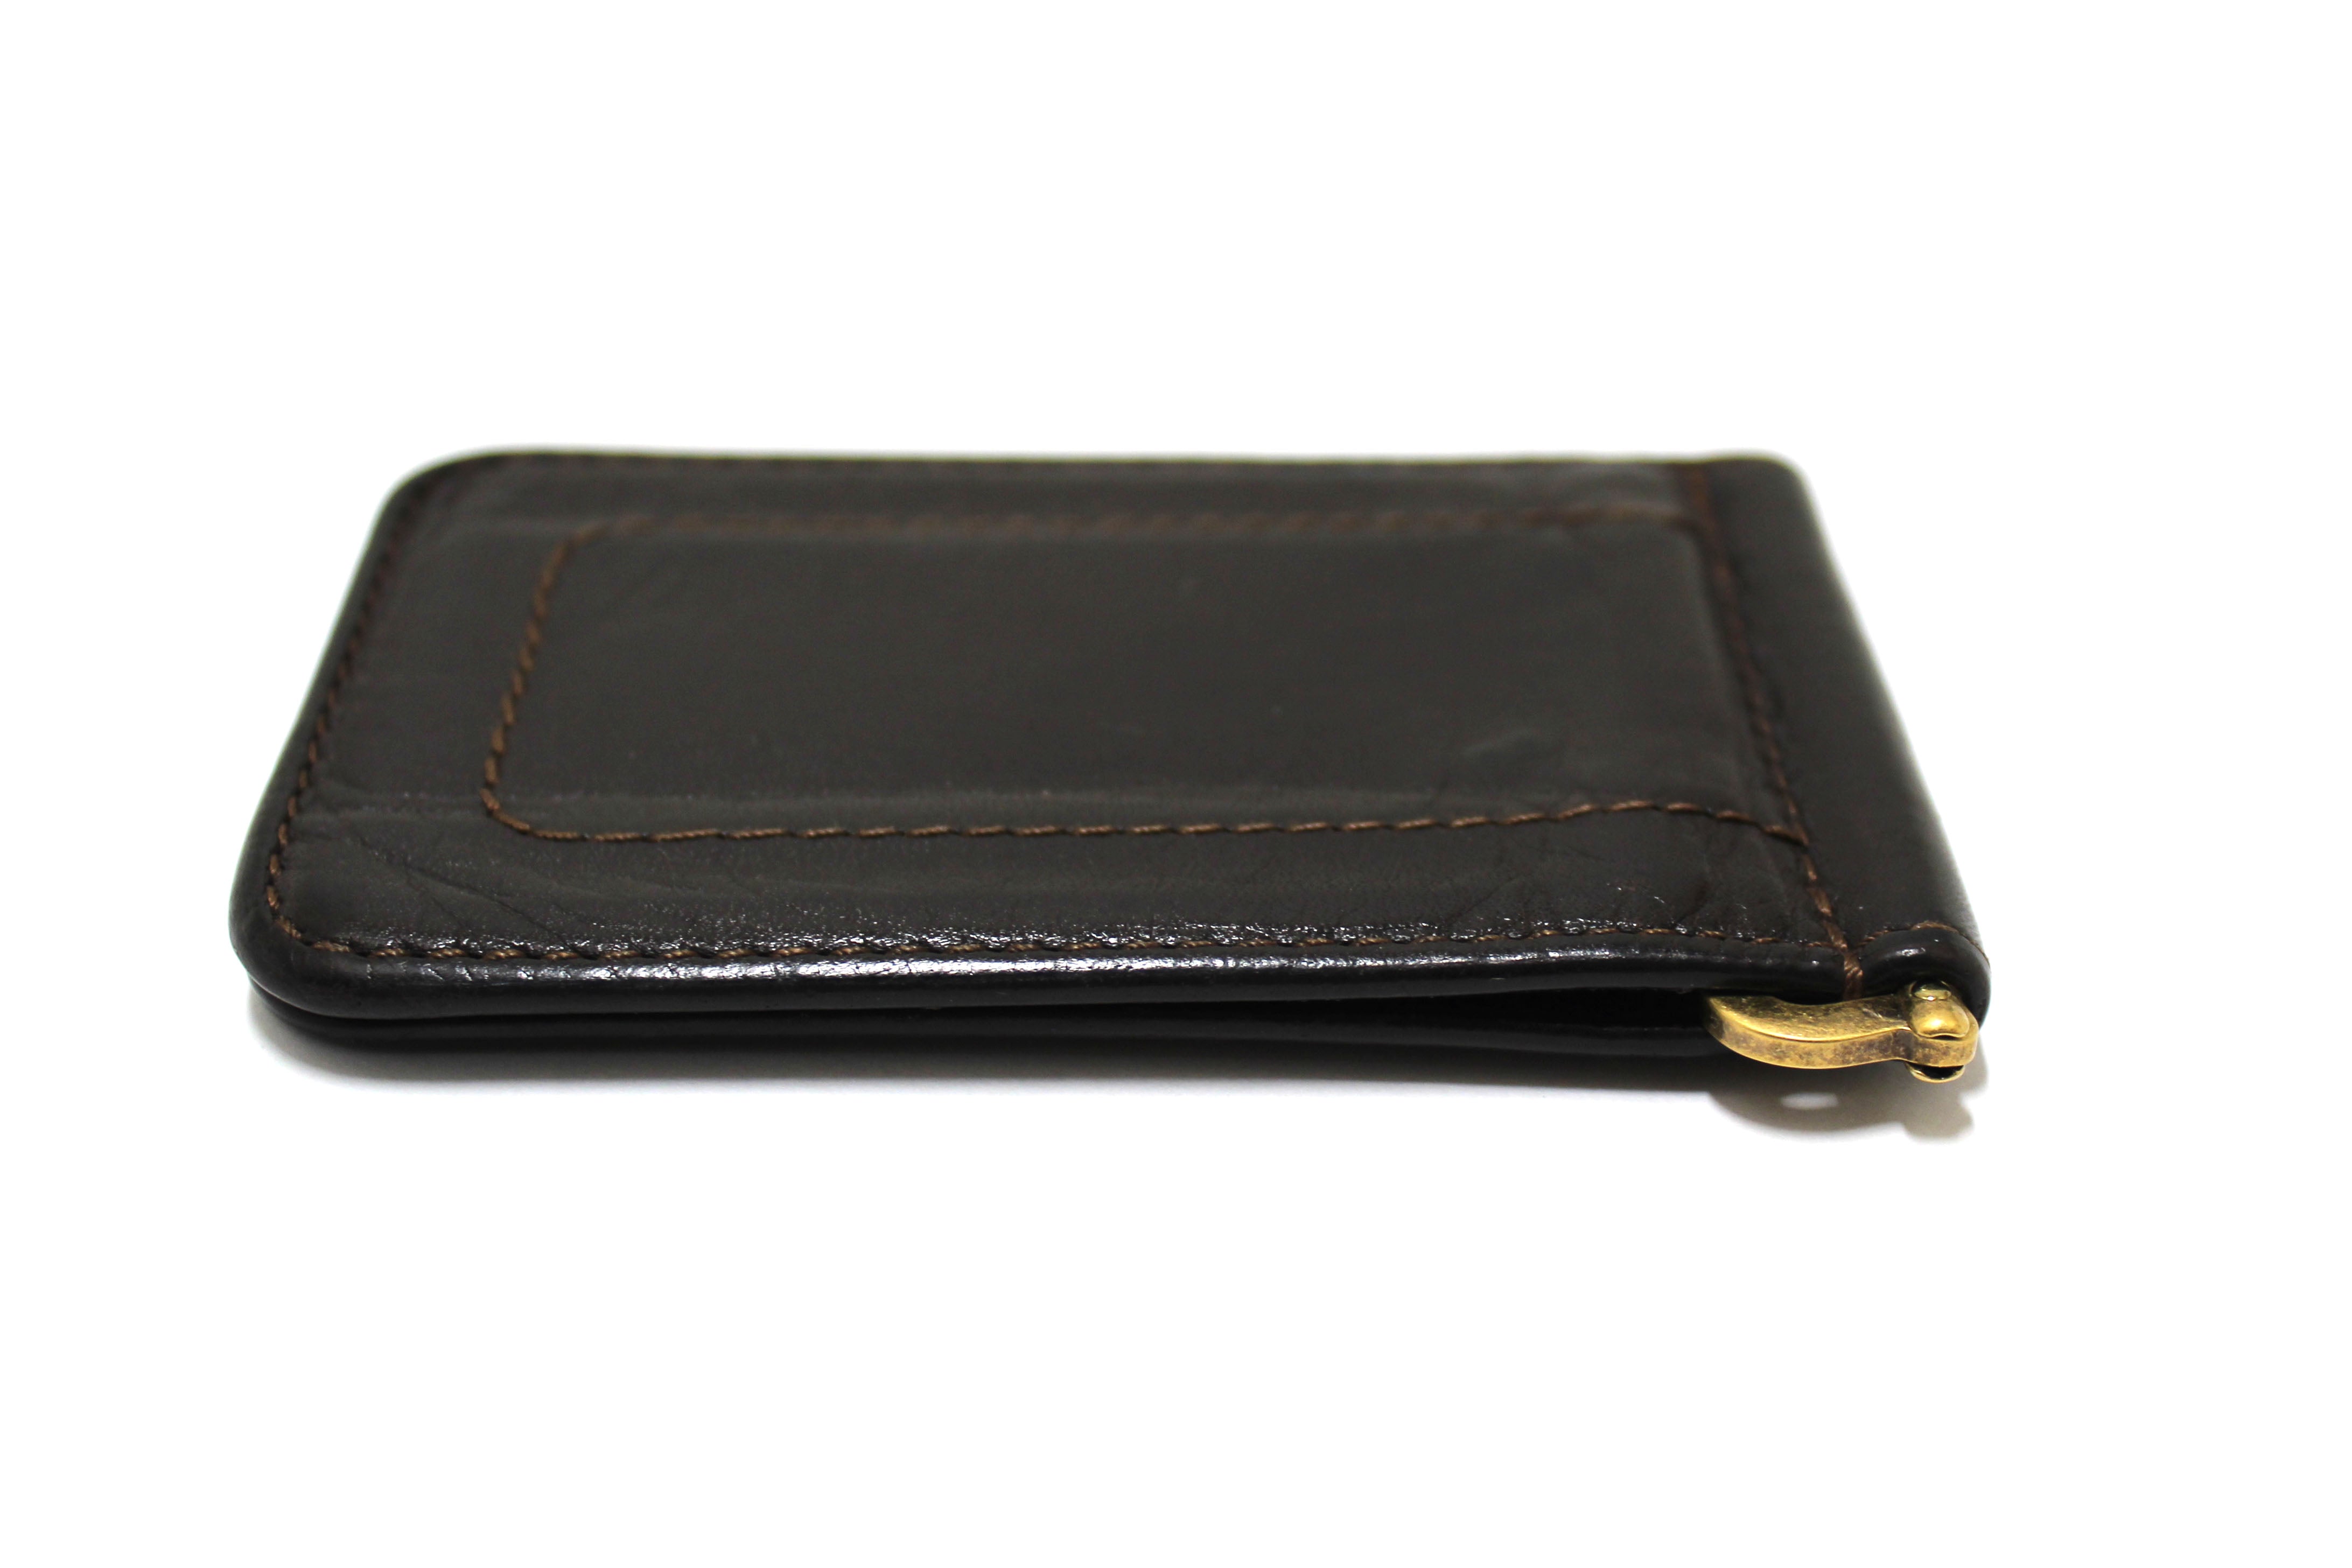 Authentic Louis Vuitton Vintage Brown Leather Money Clip Wallet Billfold